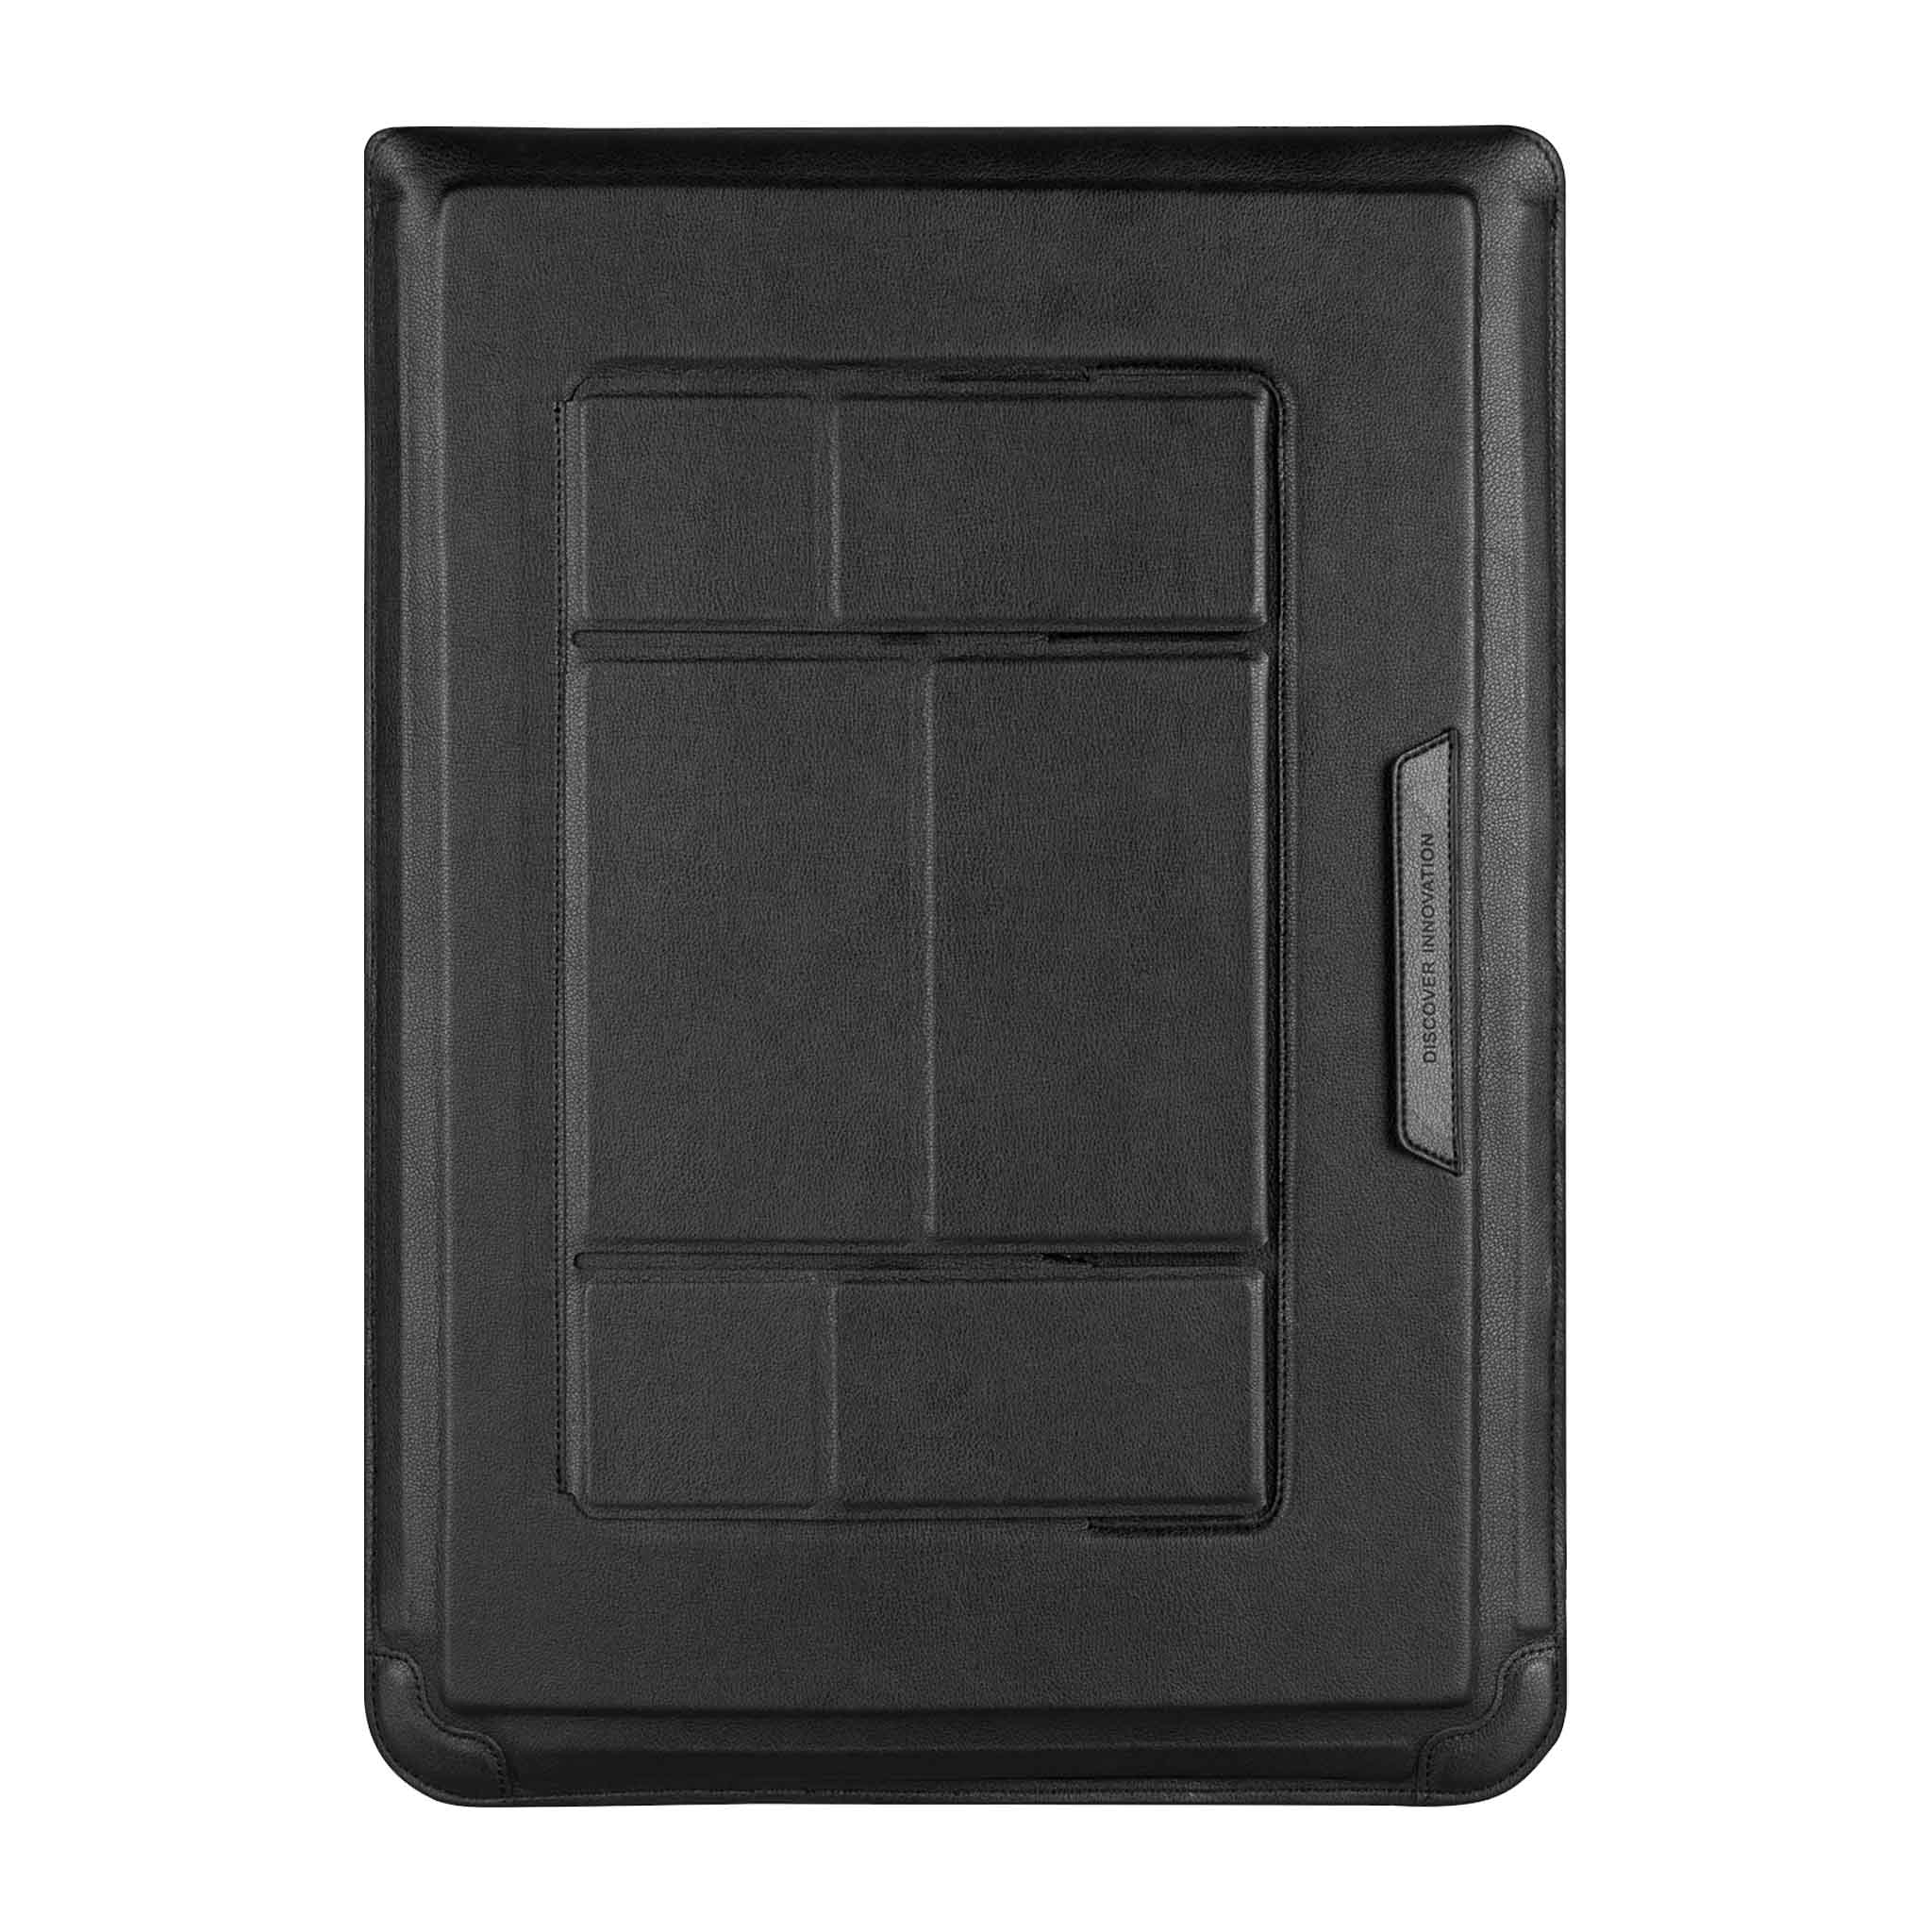 Notebook 16.1 inch / Black